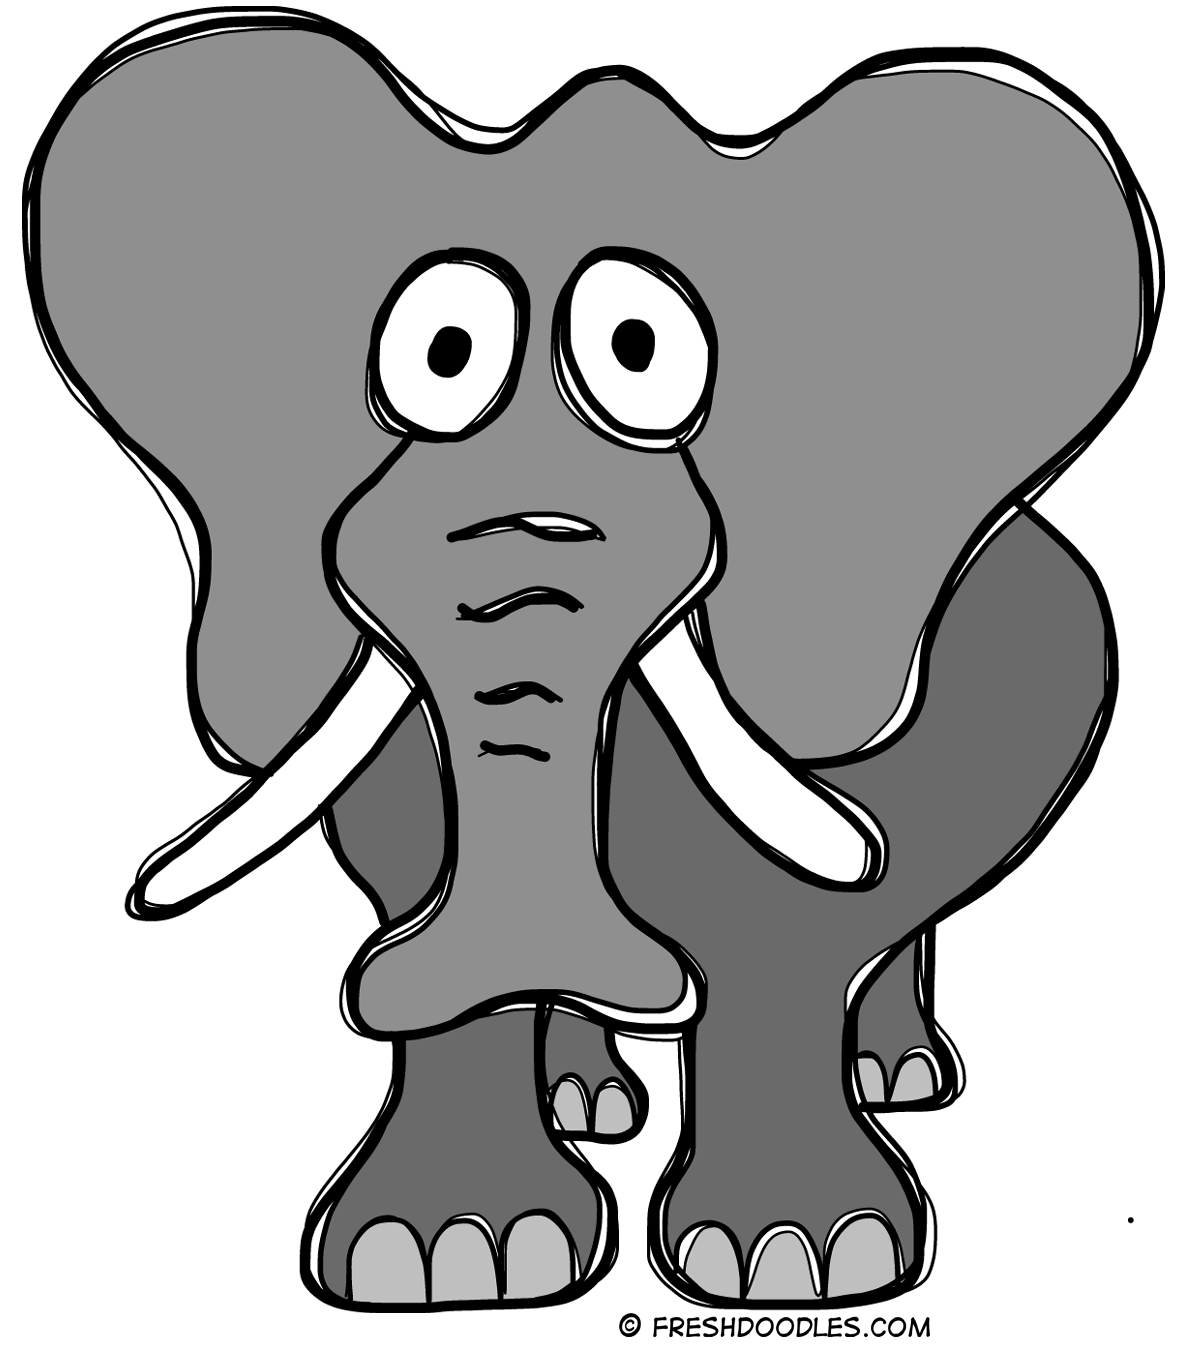 Elephant clip art image 3 2